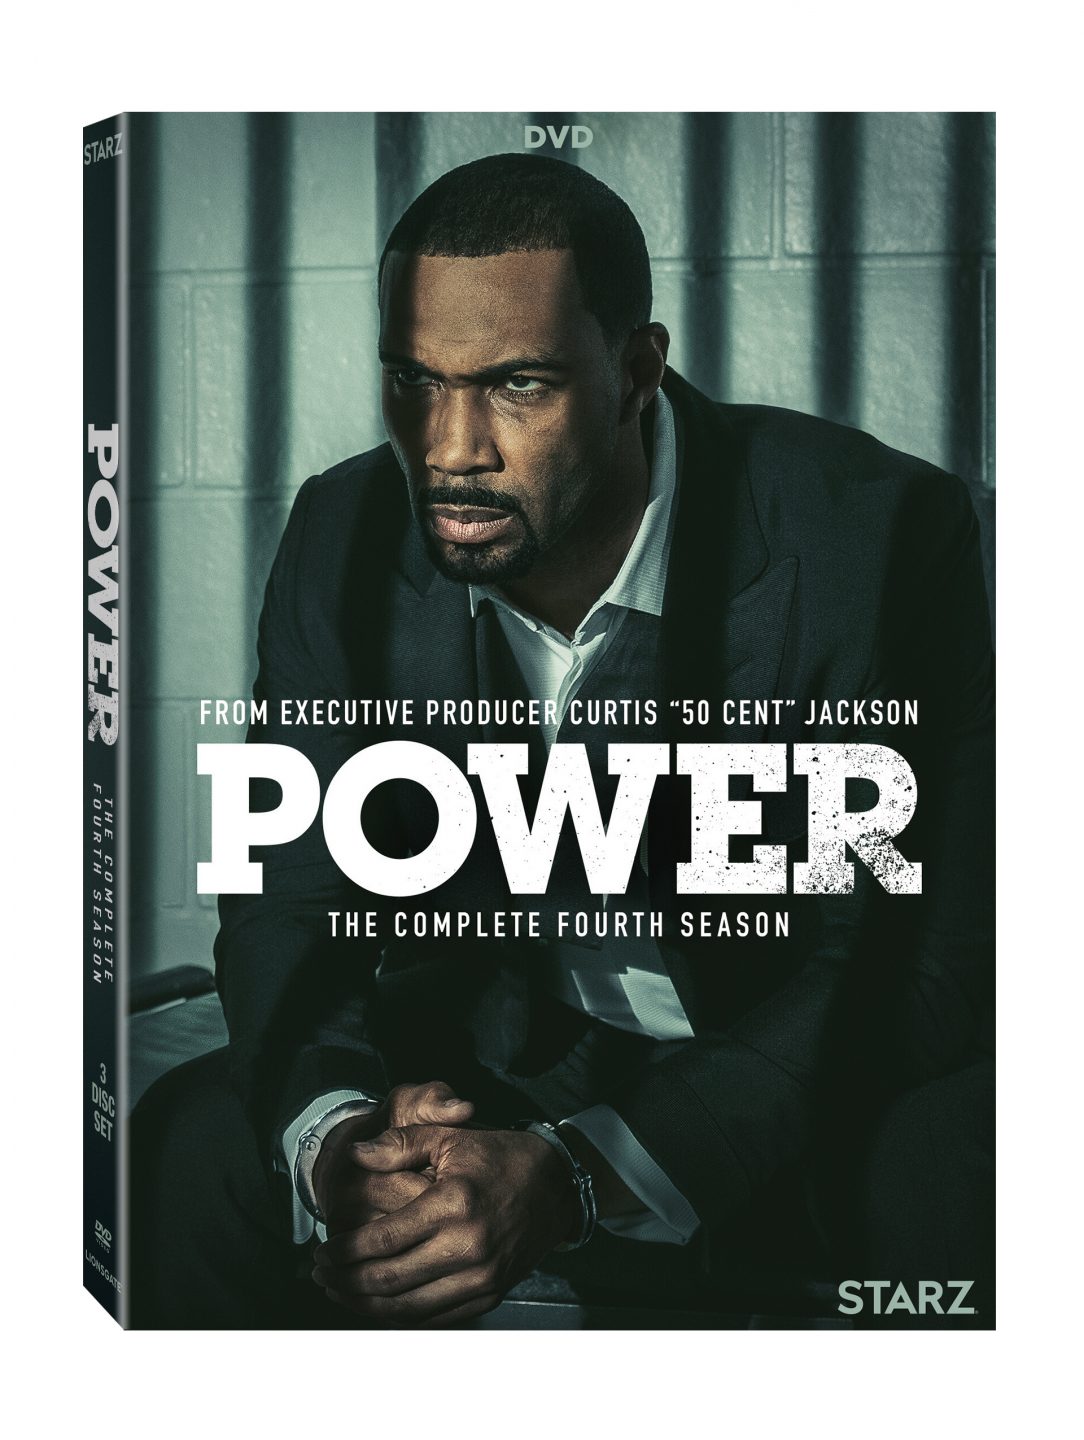 Power: Season 4 DVD cover (Lionsgate Home Entertainment)